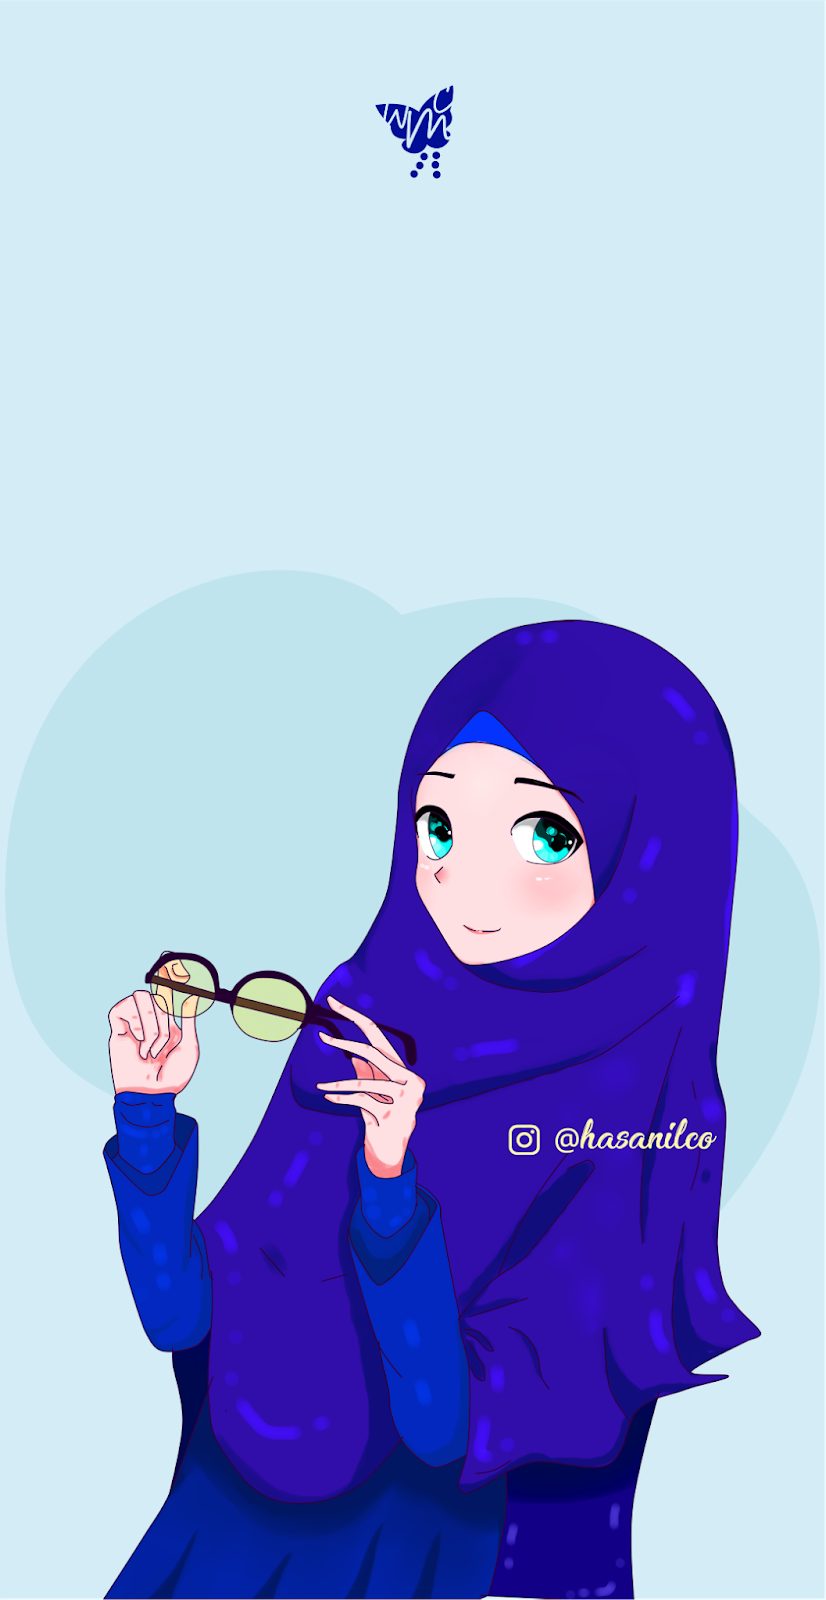 Wallpaper Cute Muslimah Cartoon Picture Heart Glasses 005 Costum Color